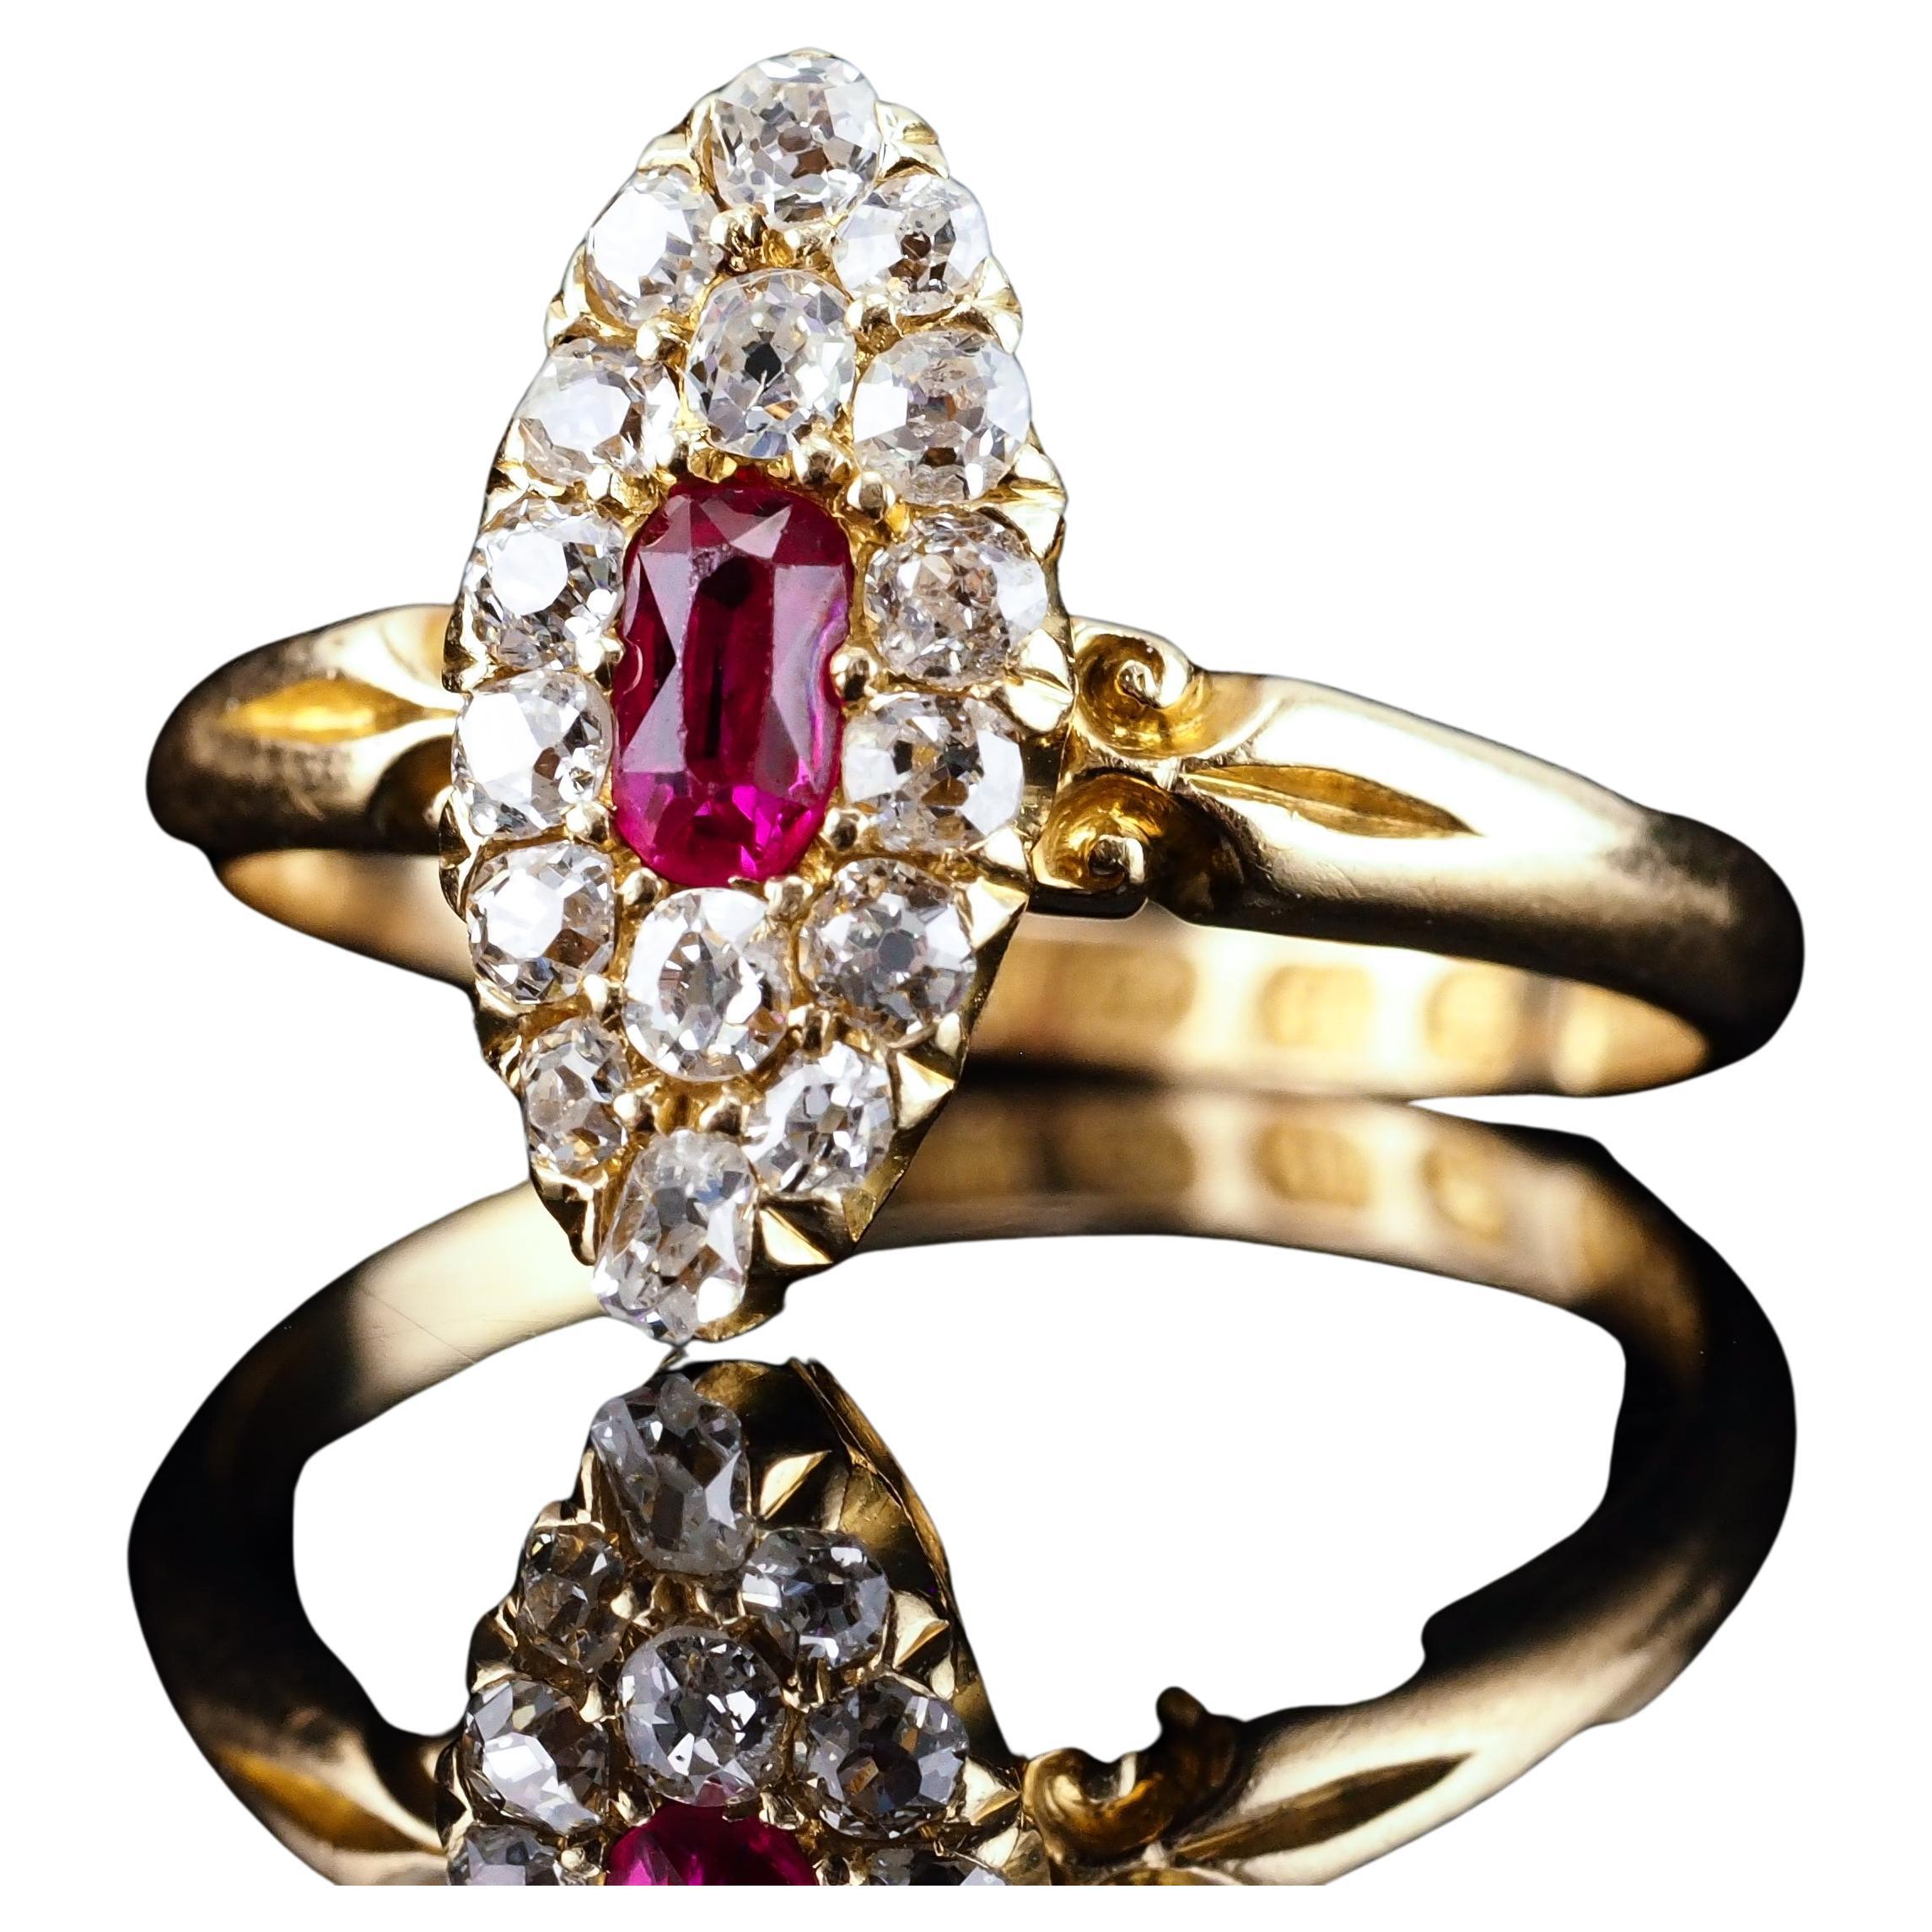 Antique Victorian Ruby & Diamond Ring 18K Gold Cluster Navette Design - 1886